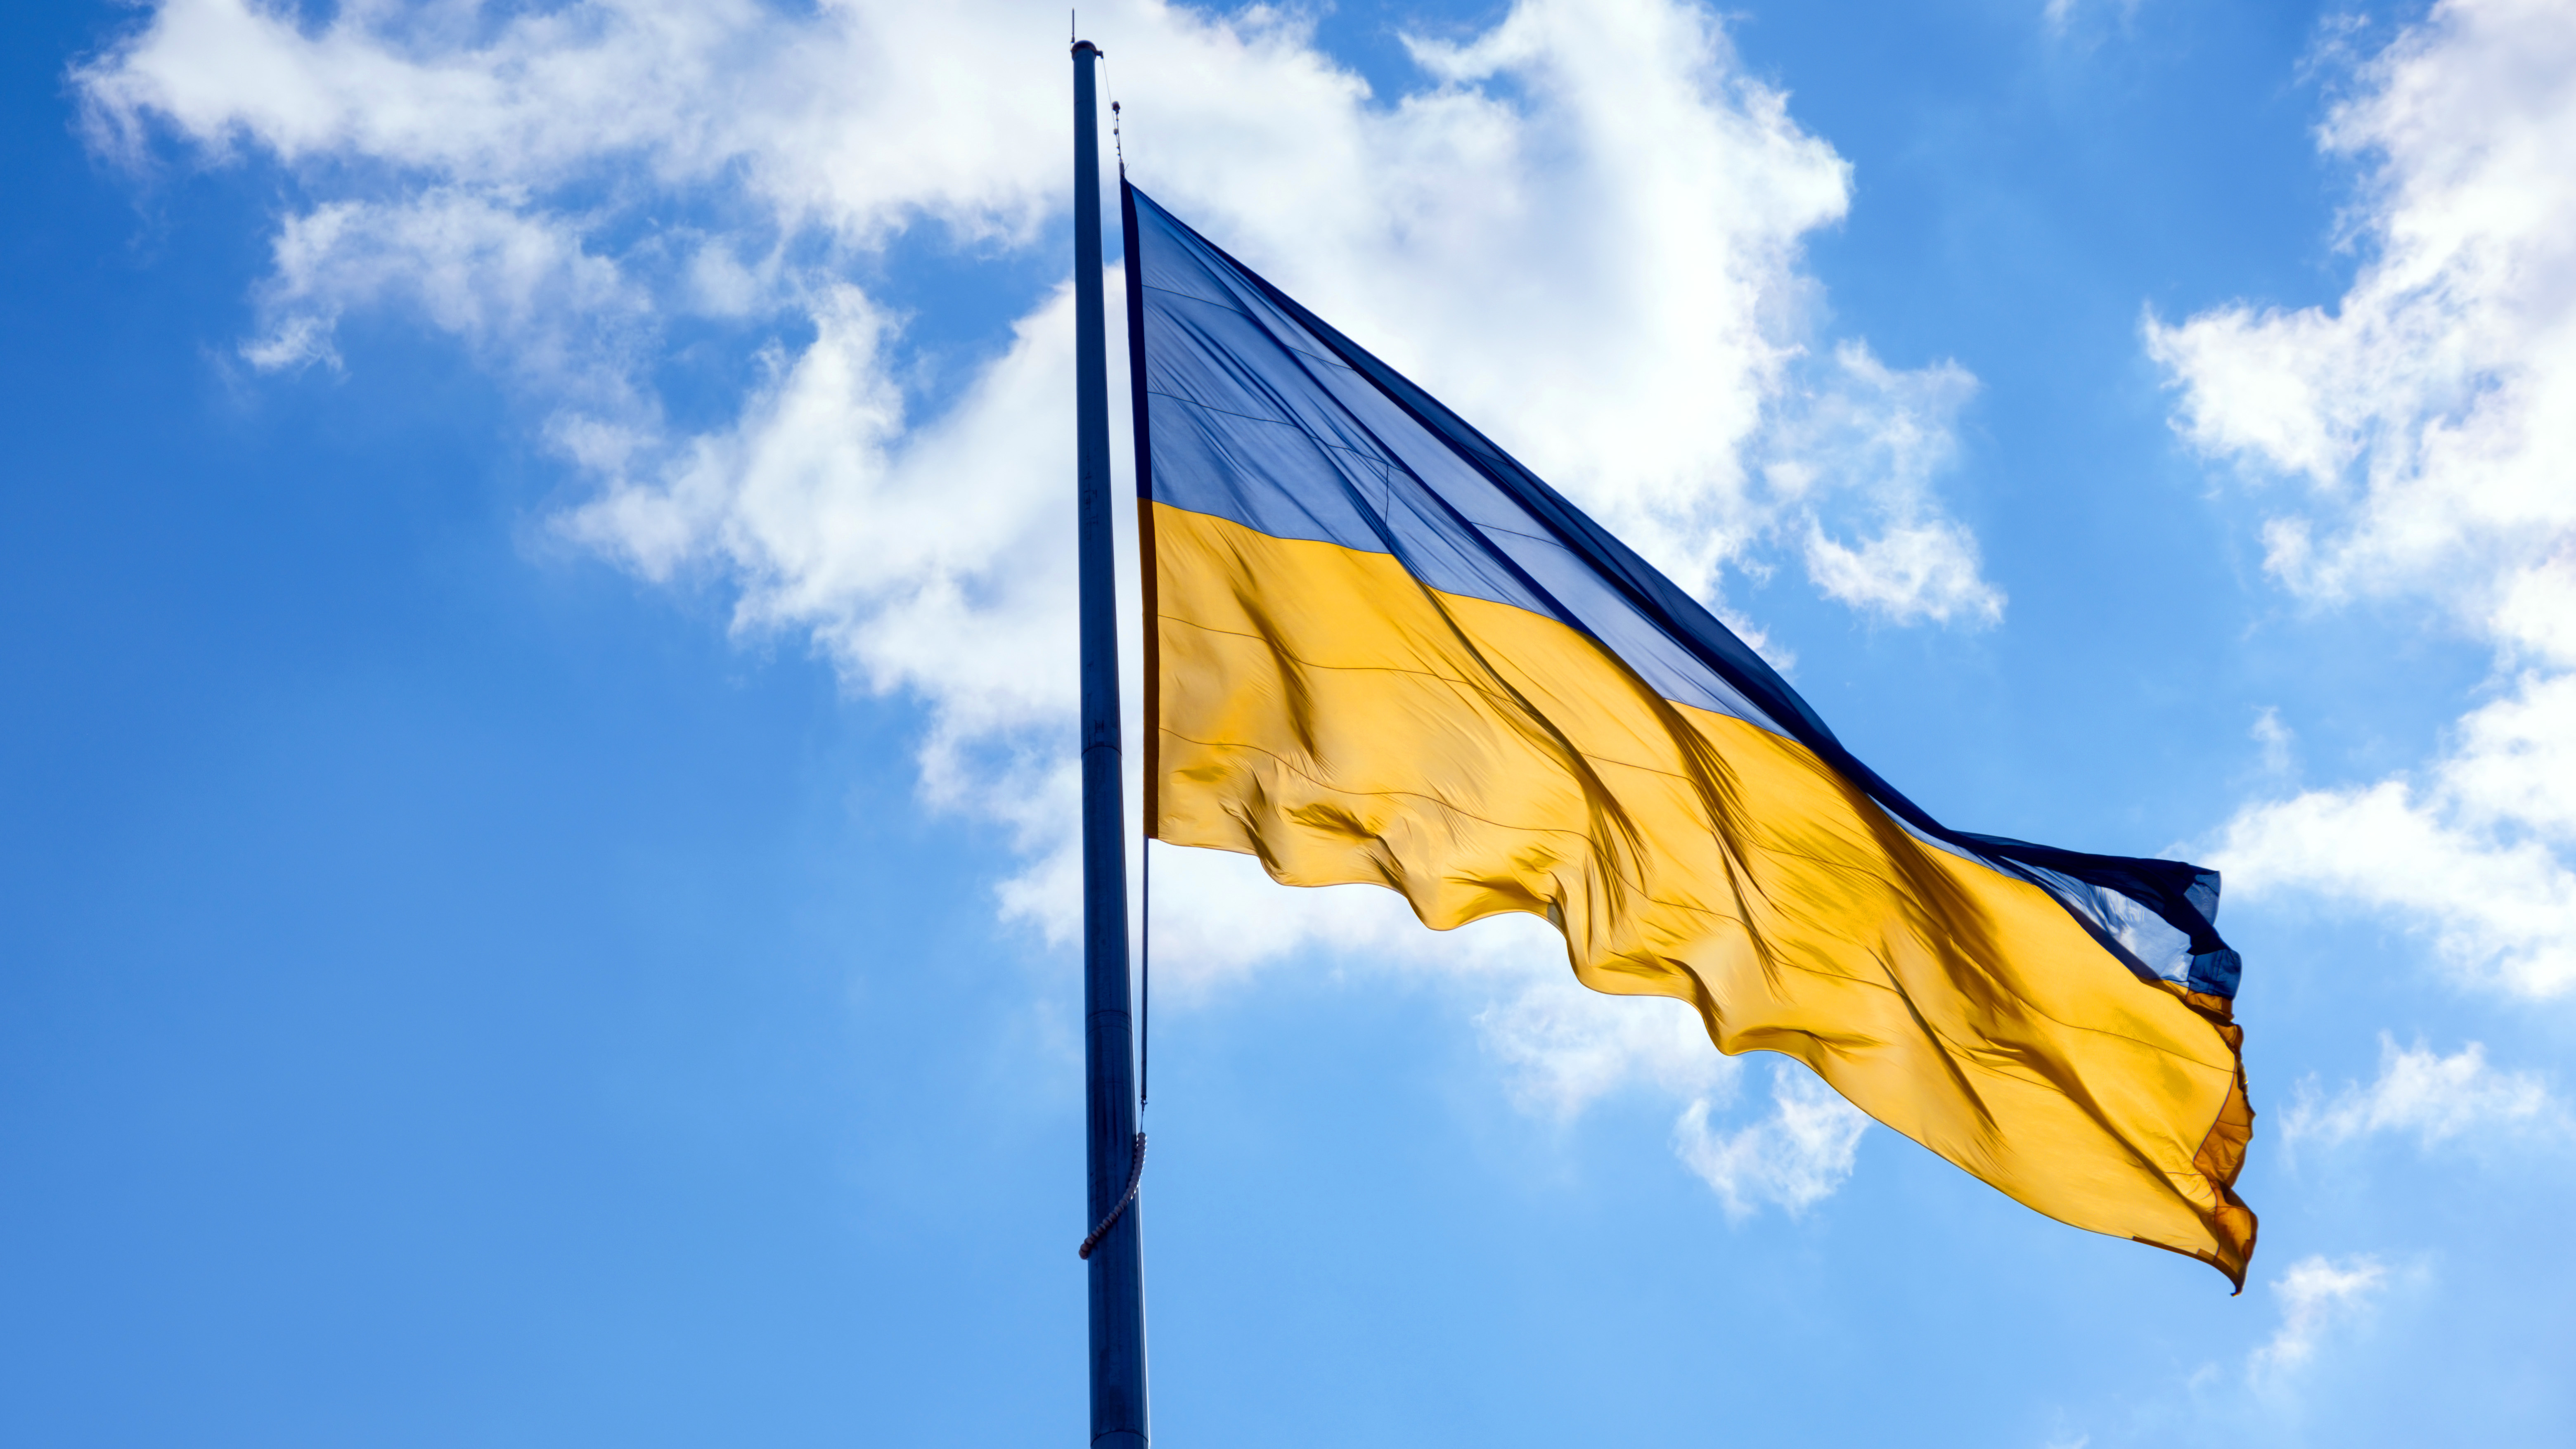 Flag of ukraine flutters in blue sky large yellow 2022 03 29 23 37 35 utc